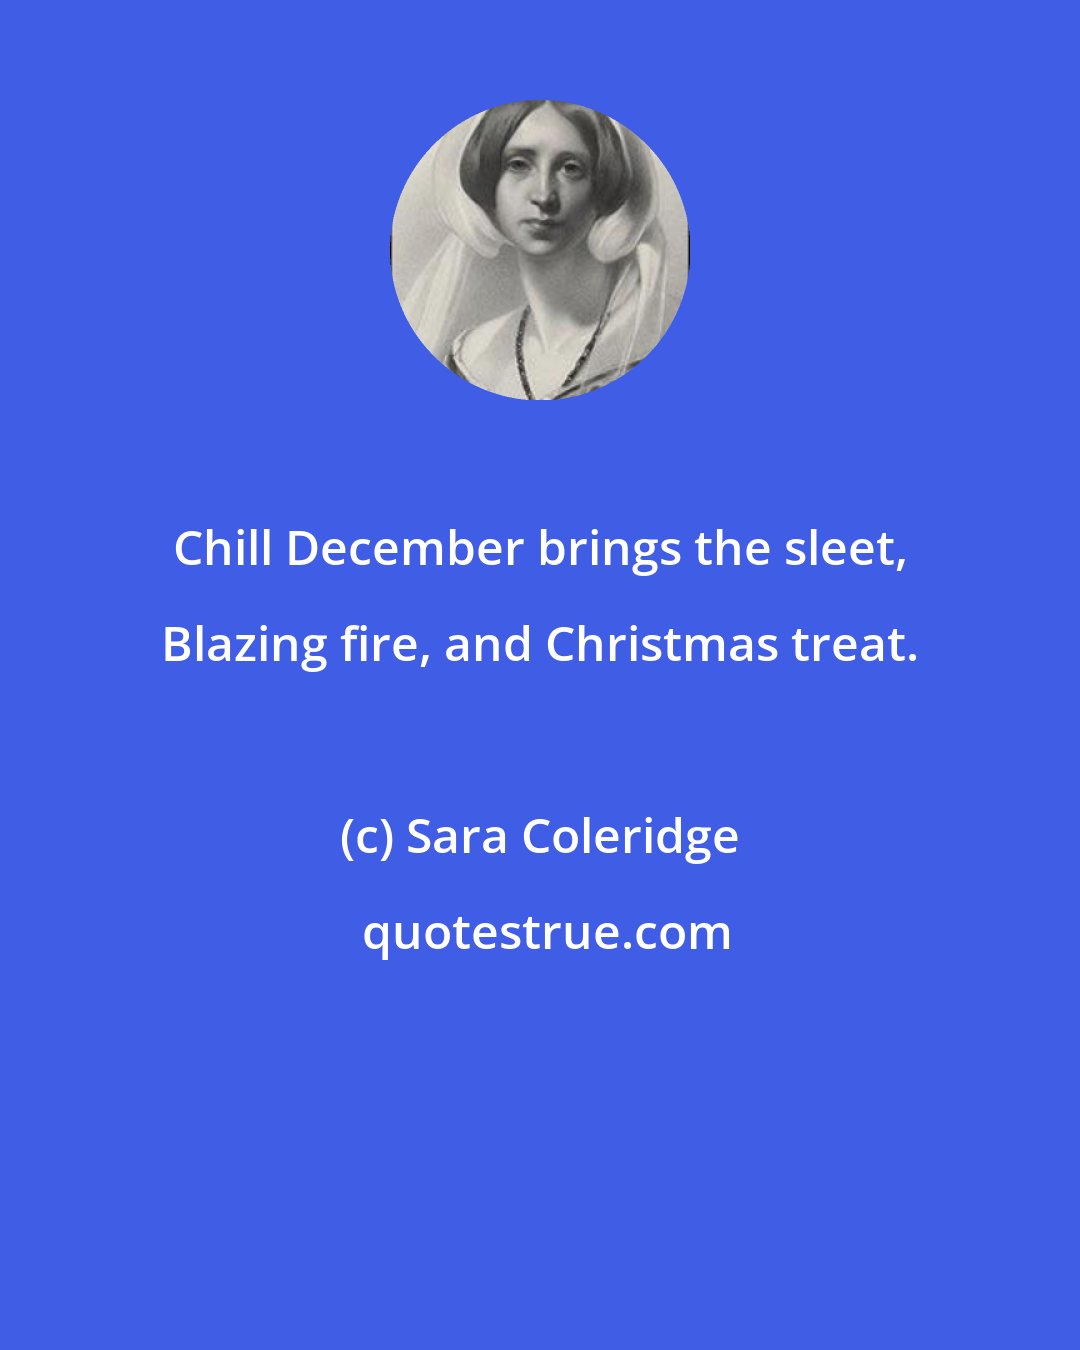 Sara Coleridge: Chill December brings the sleet, Blazing fire, and Christmas treat.